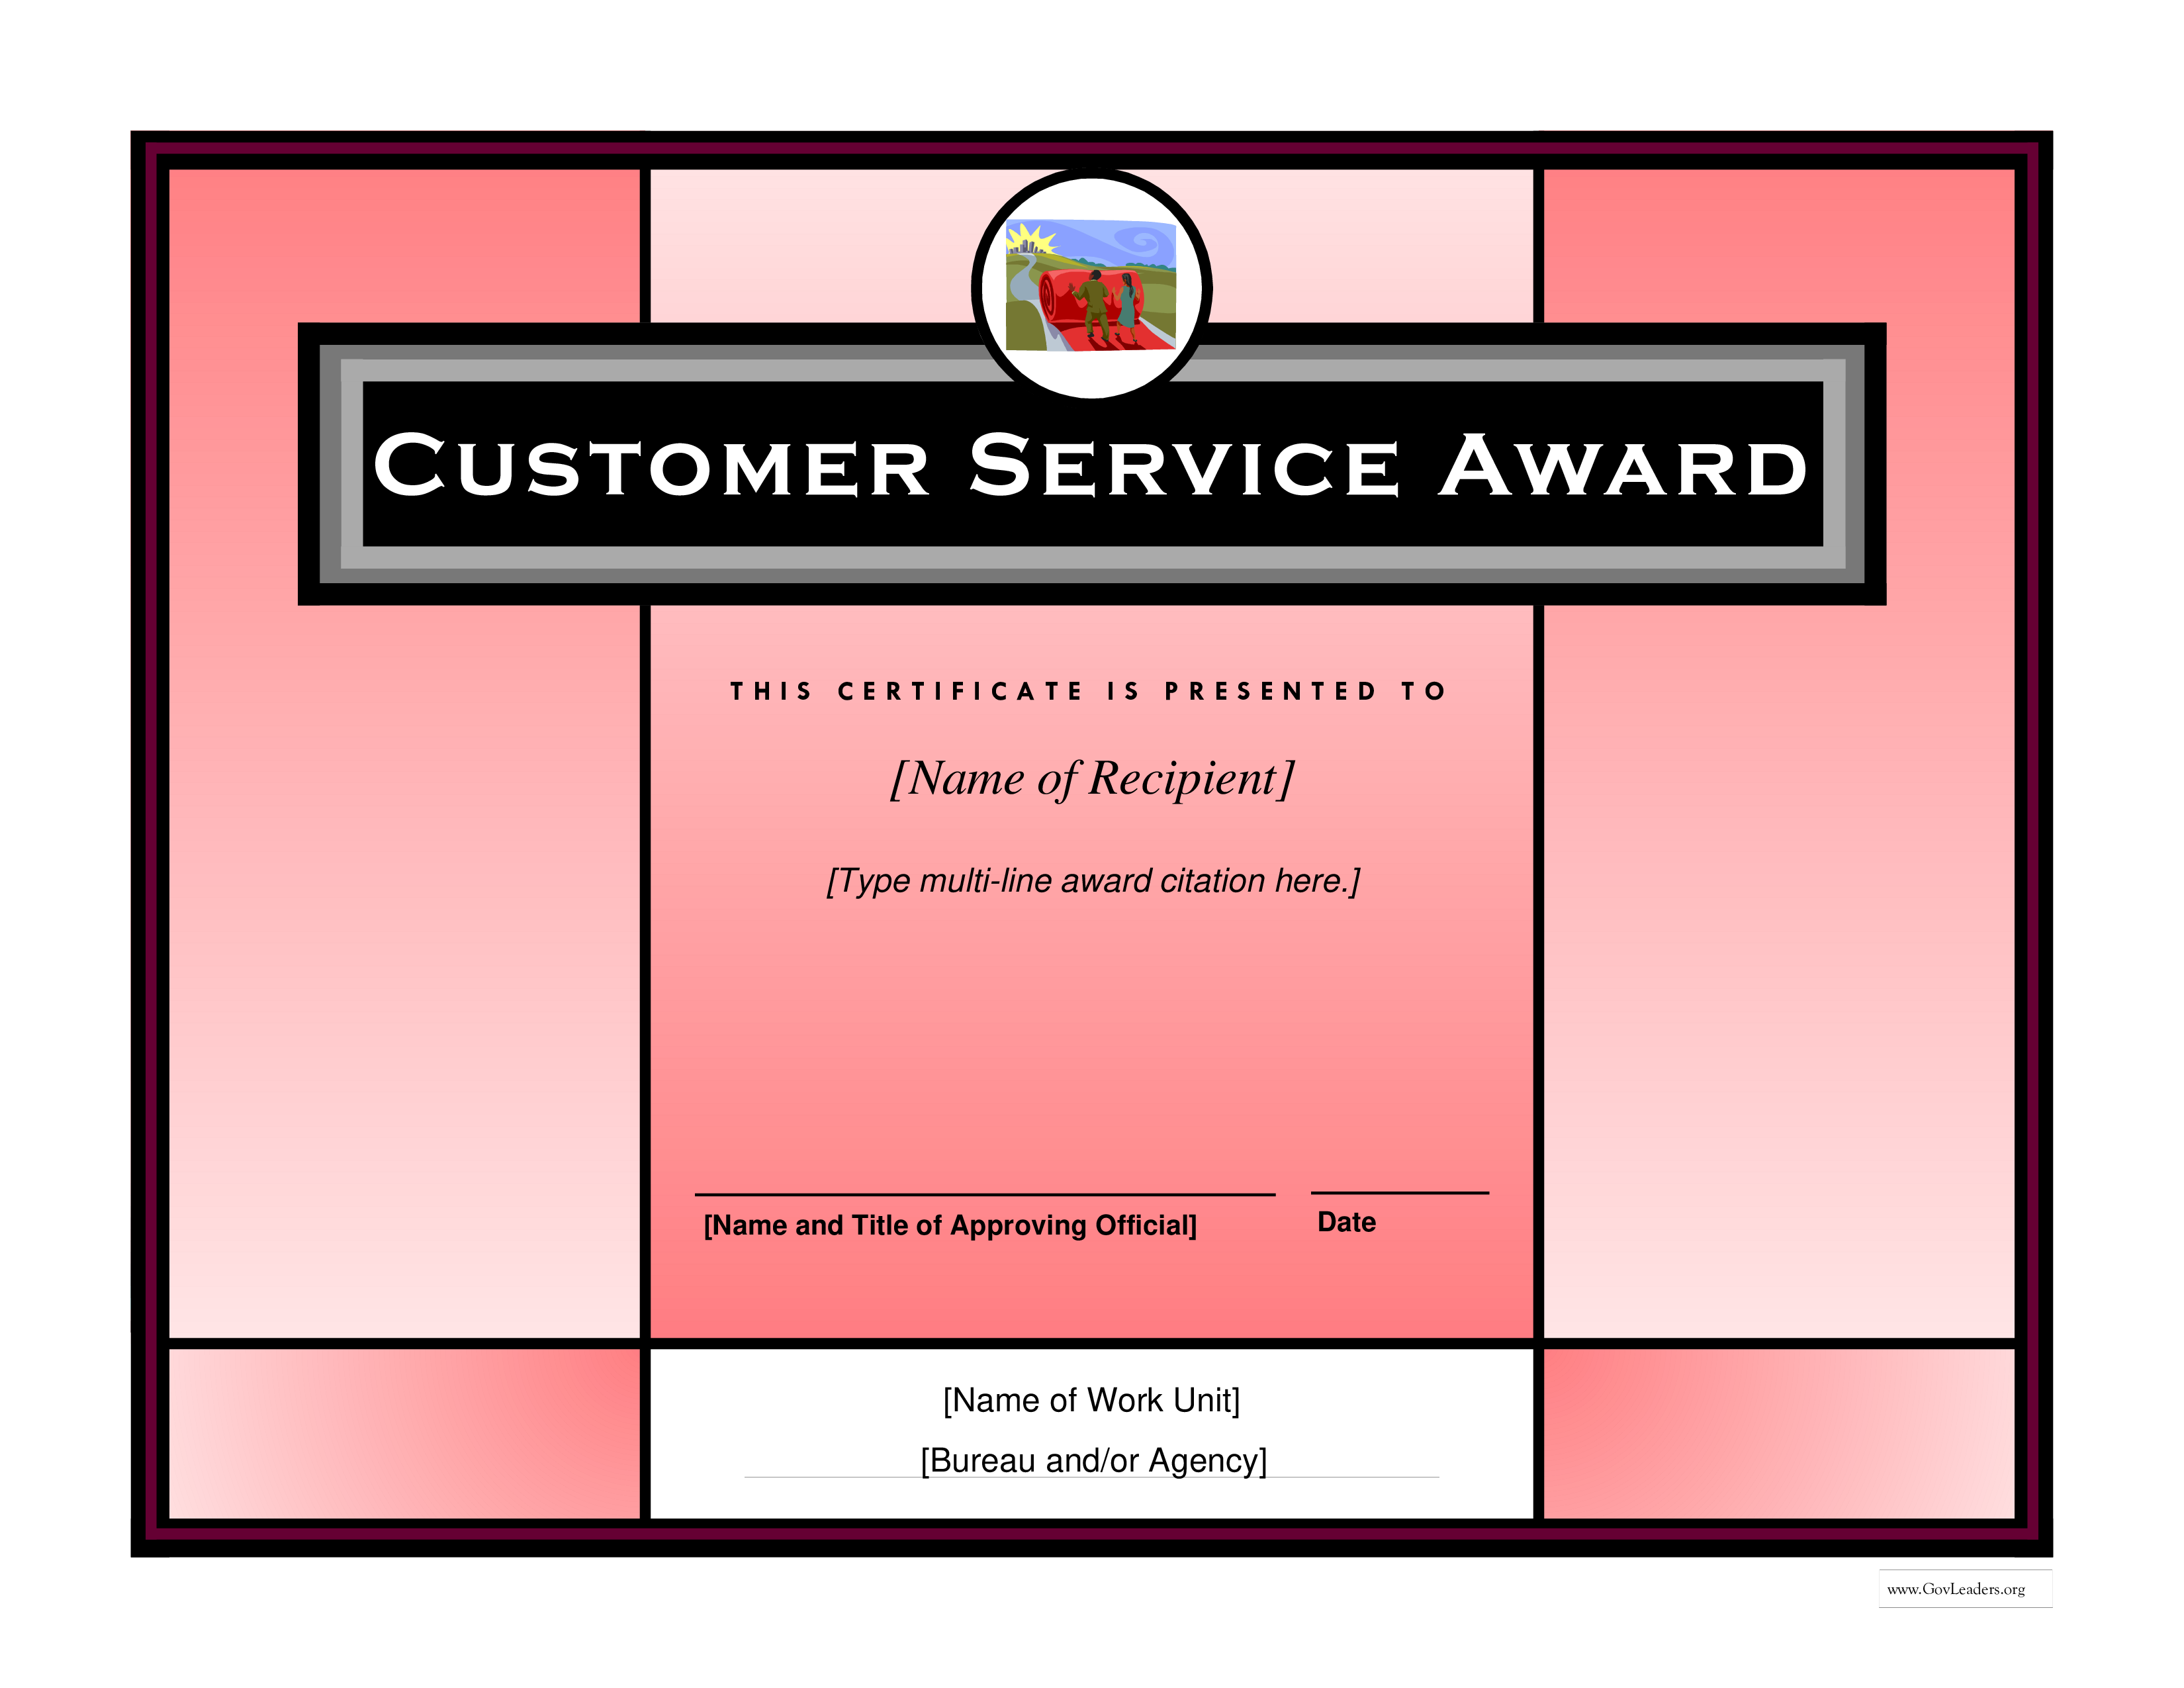 Customer Service Award Certificate main image